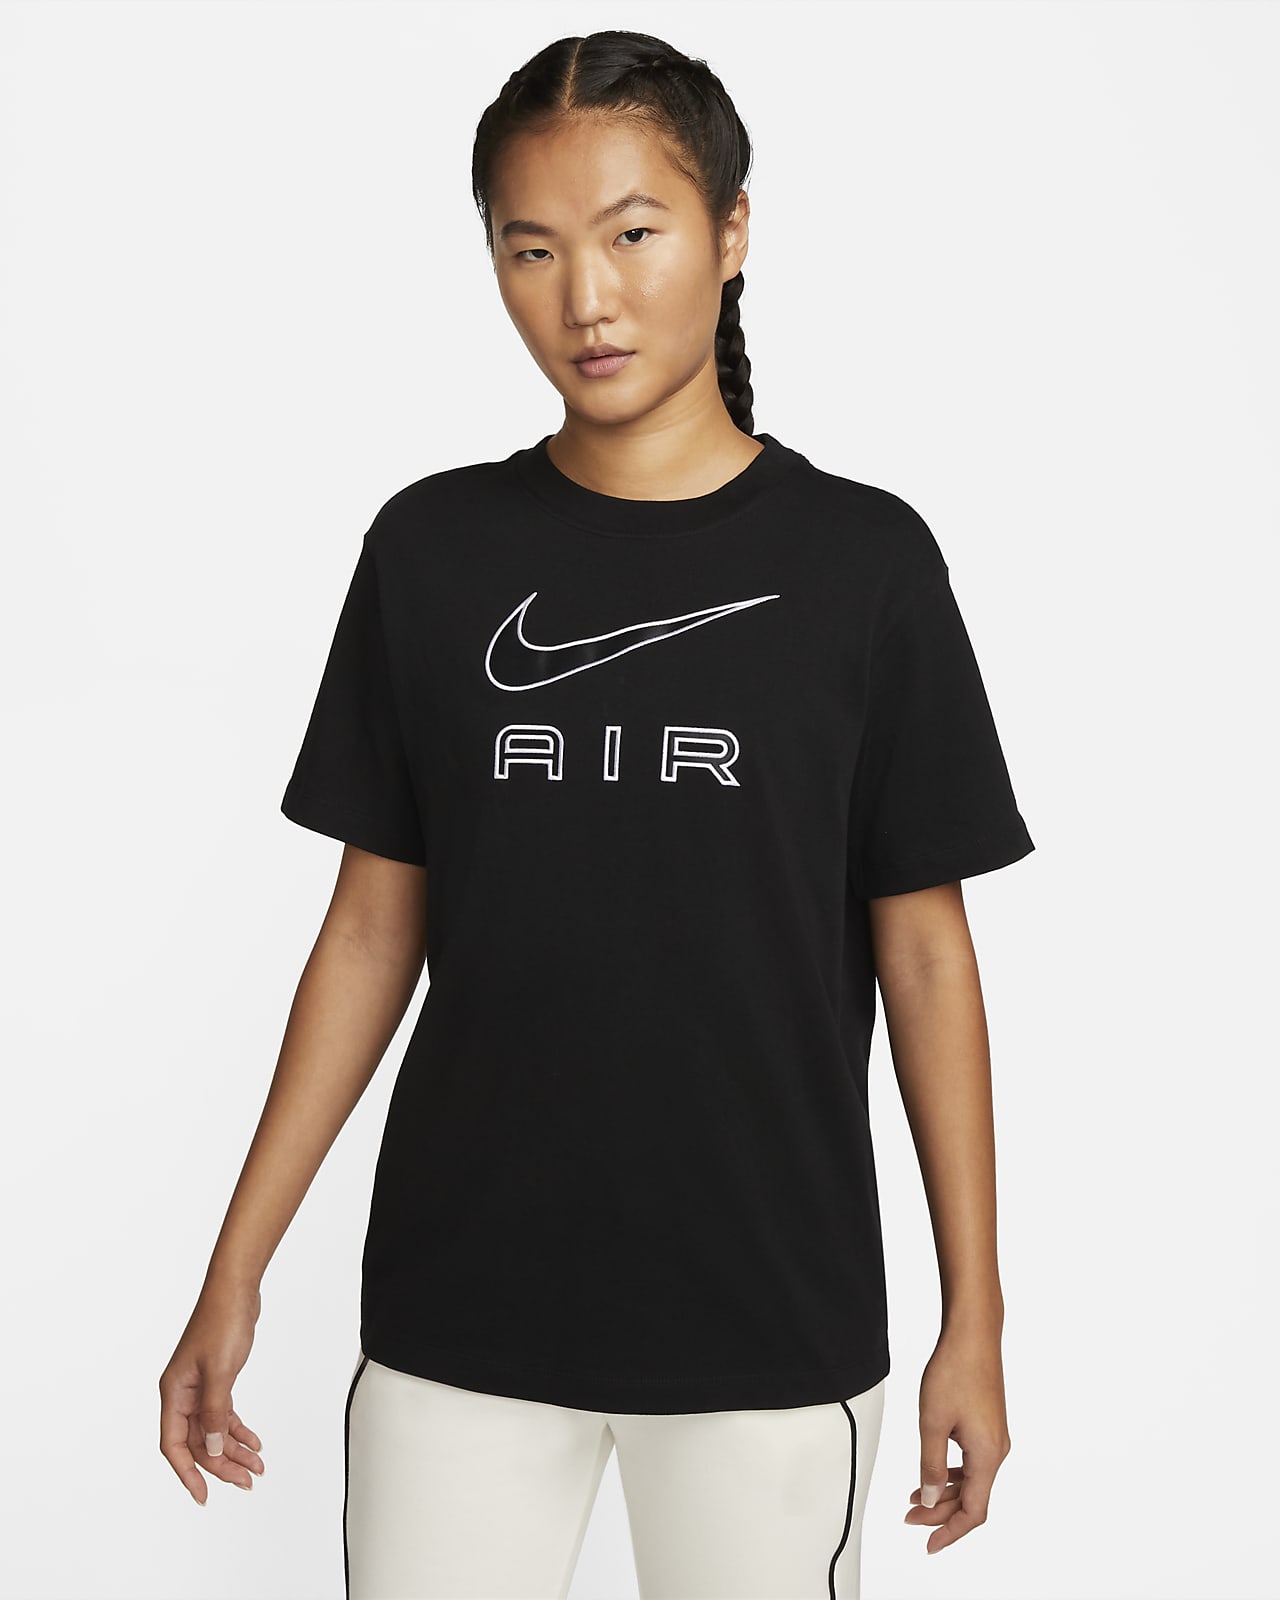 Nike TShirts - Buy Nike T-shirts Online in India